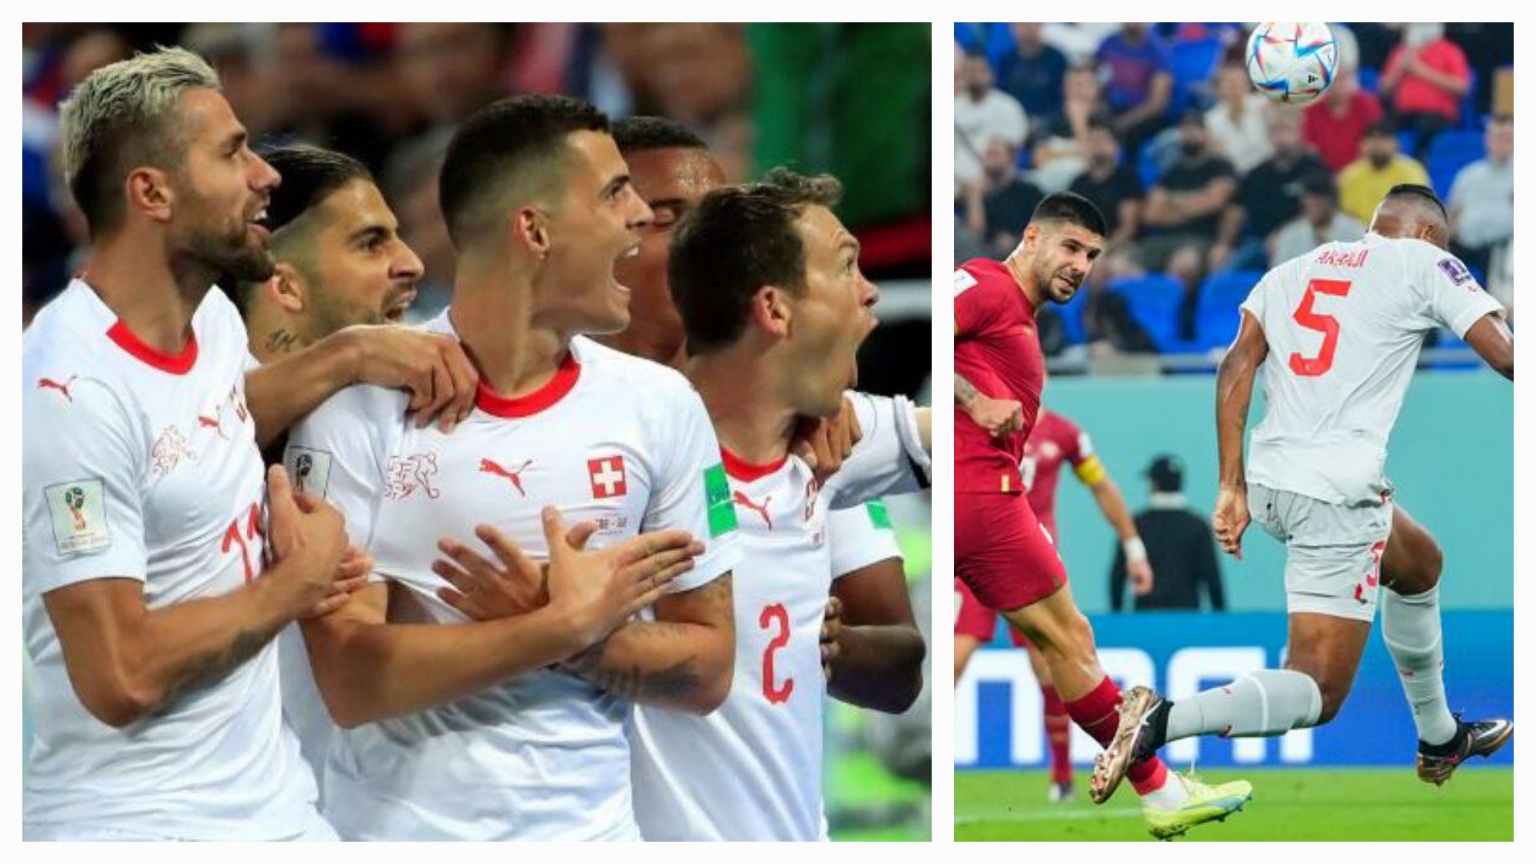 Serbia vs Switzerland